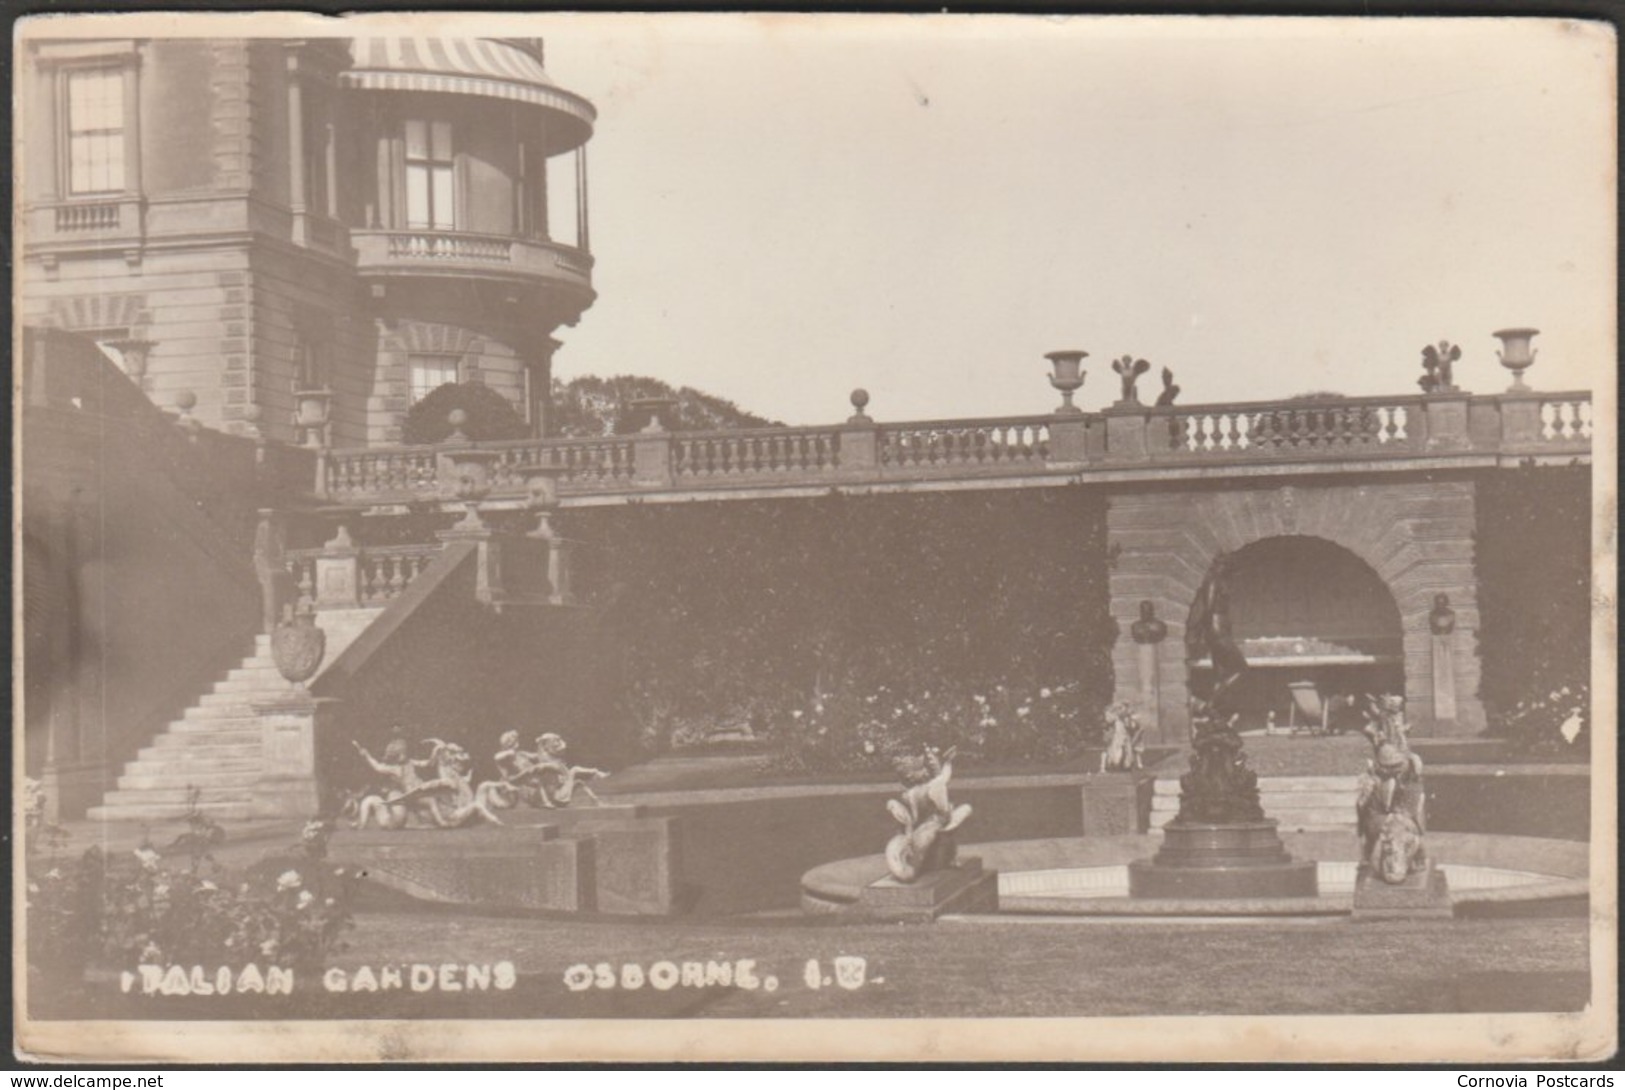 Italian Gardens, Osborne, Isle Of Wight, C.1910s - RP Postcard - Cowes